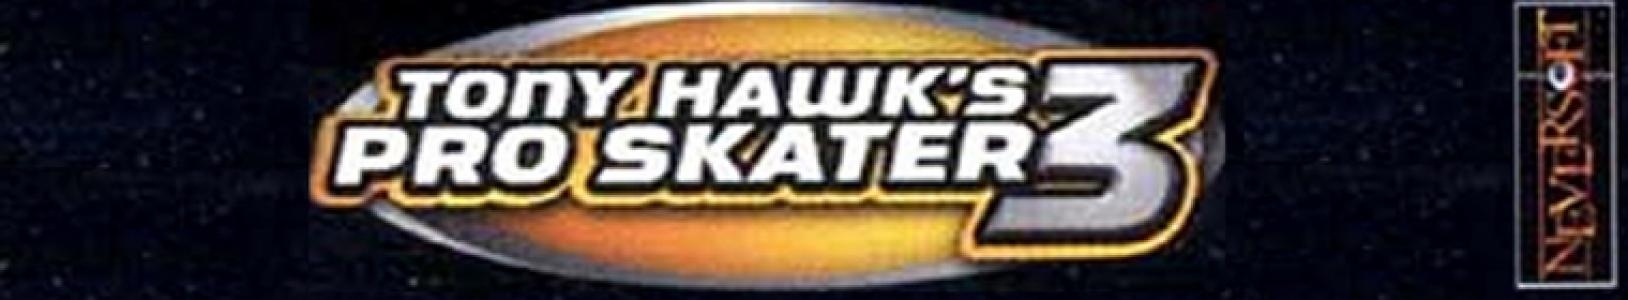 Tony Hawk's Pro Skater 3 banner